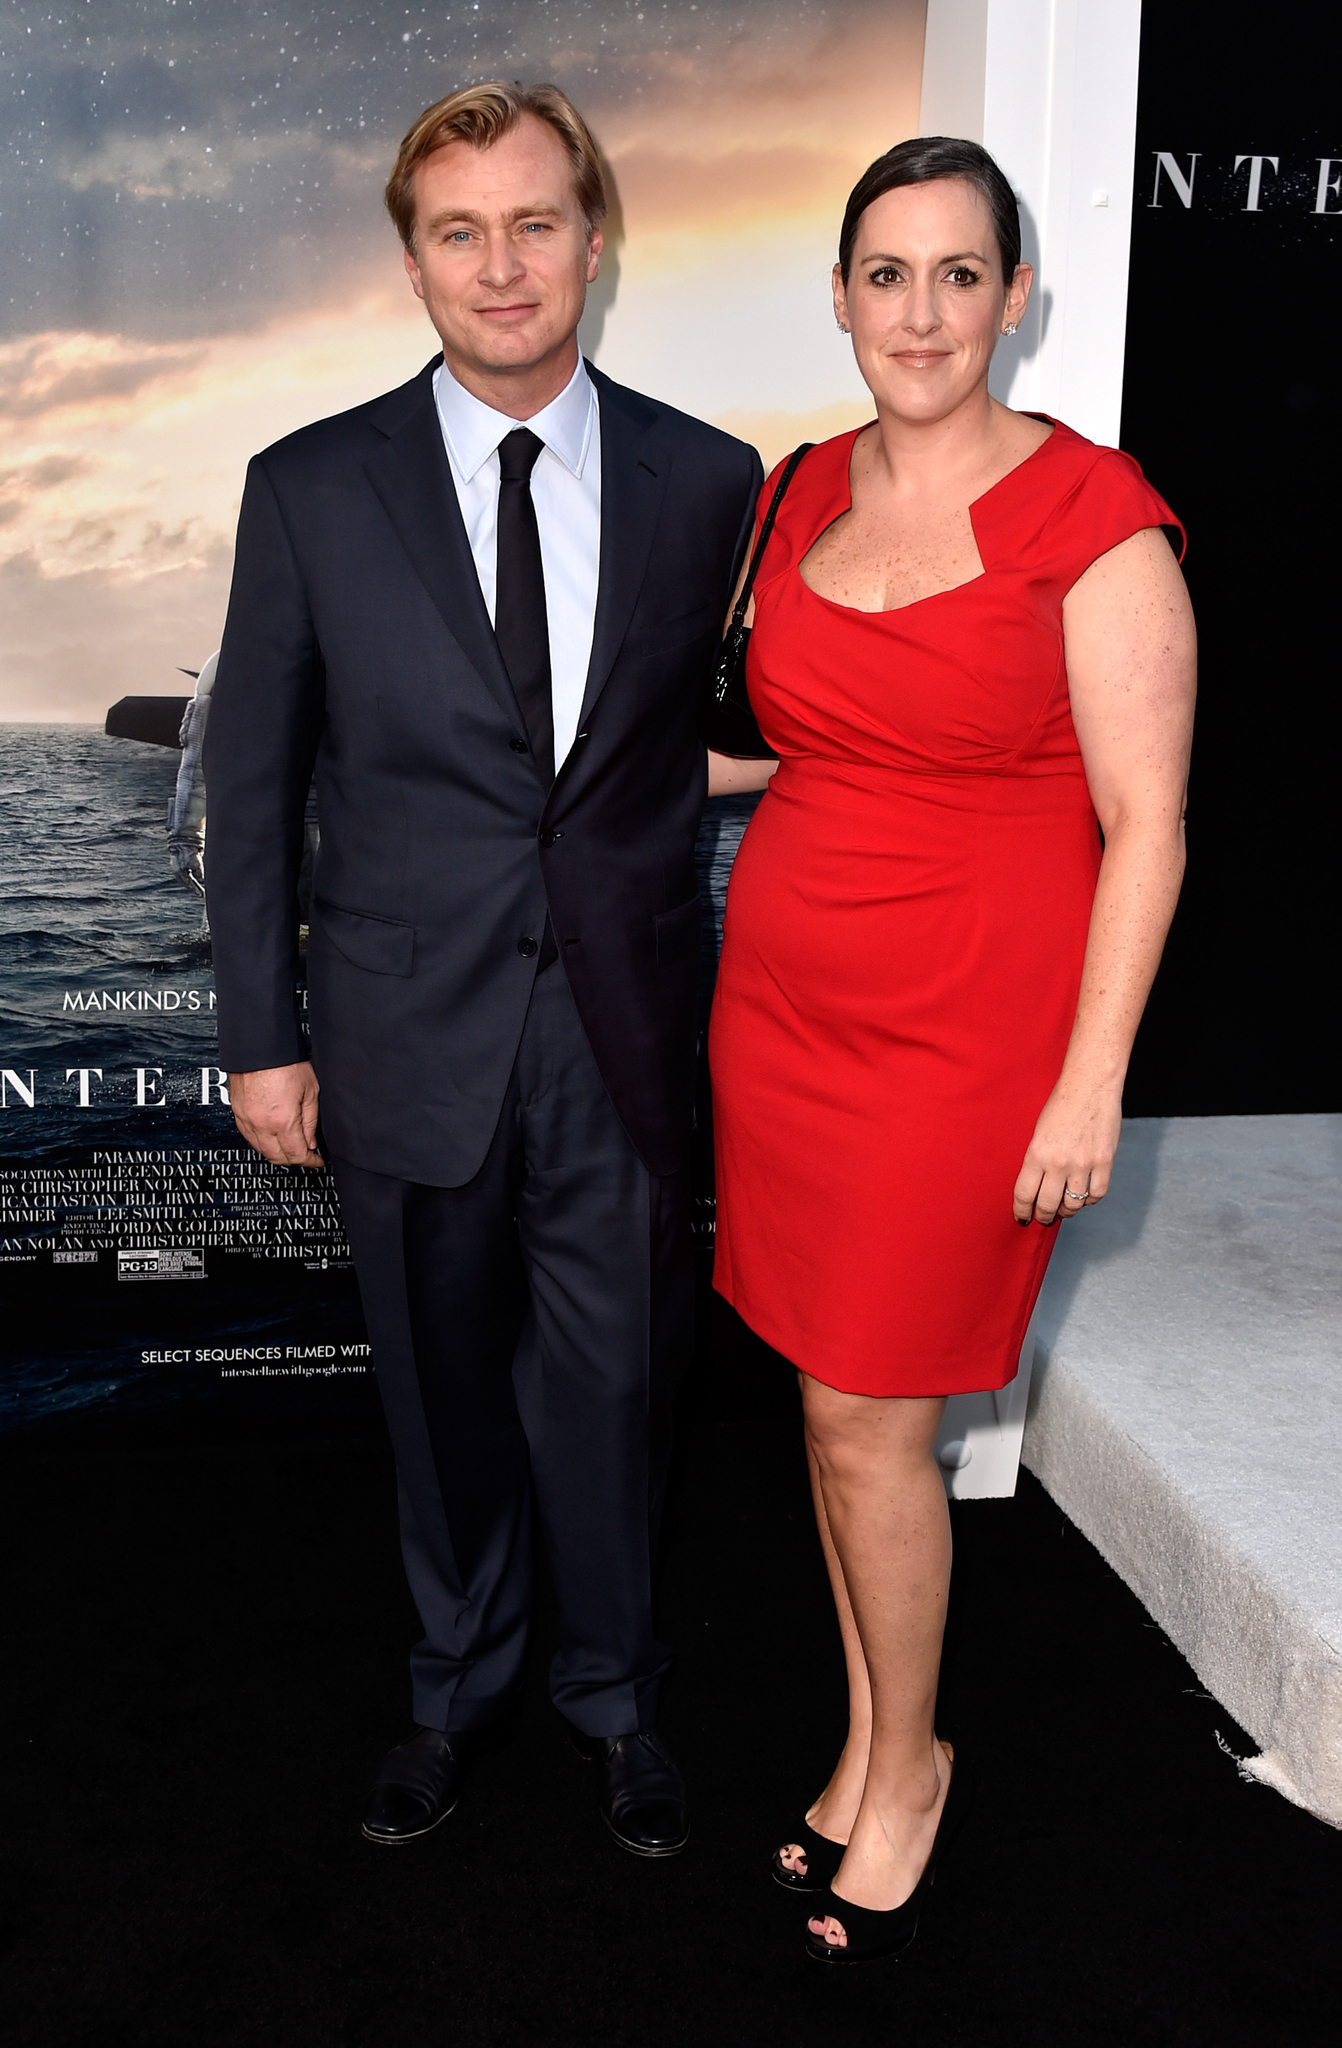 Christopher Nolan et Emma Thomas lors de la promotion de « Interstellar » en 2014 - Getty Image